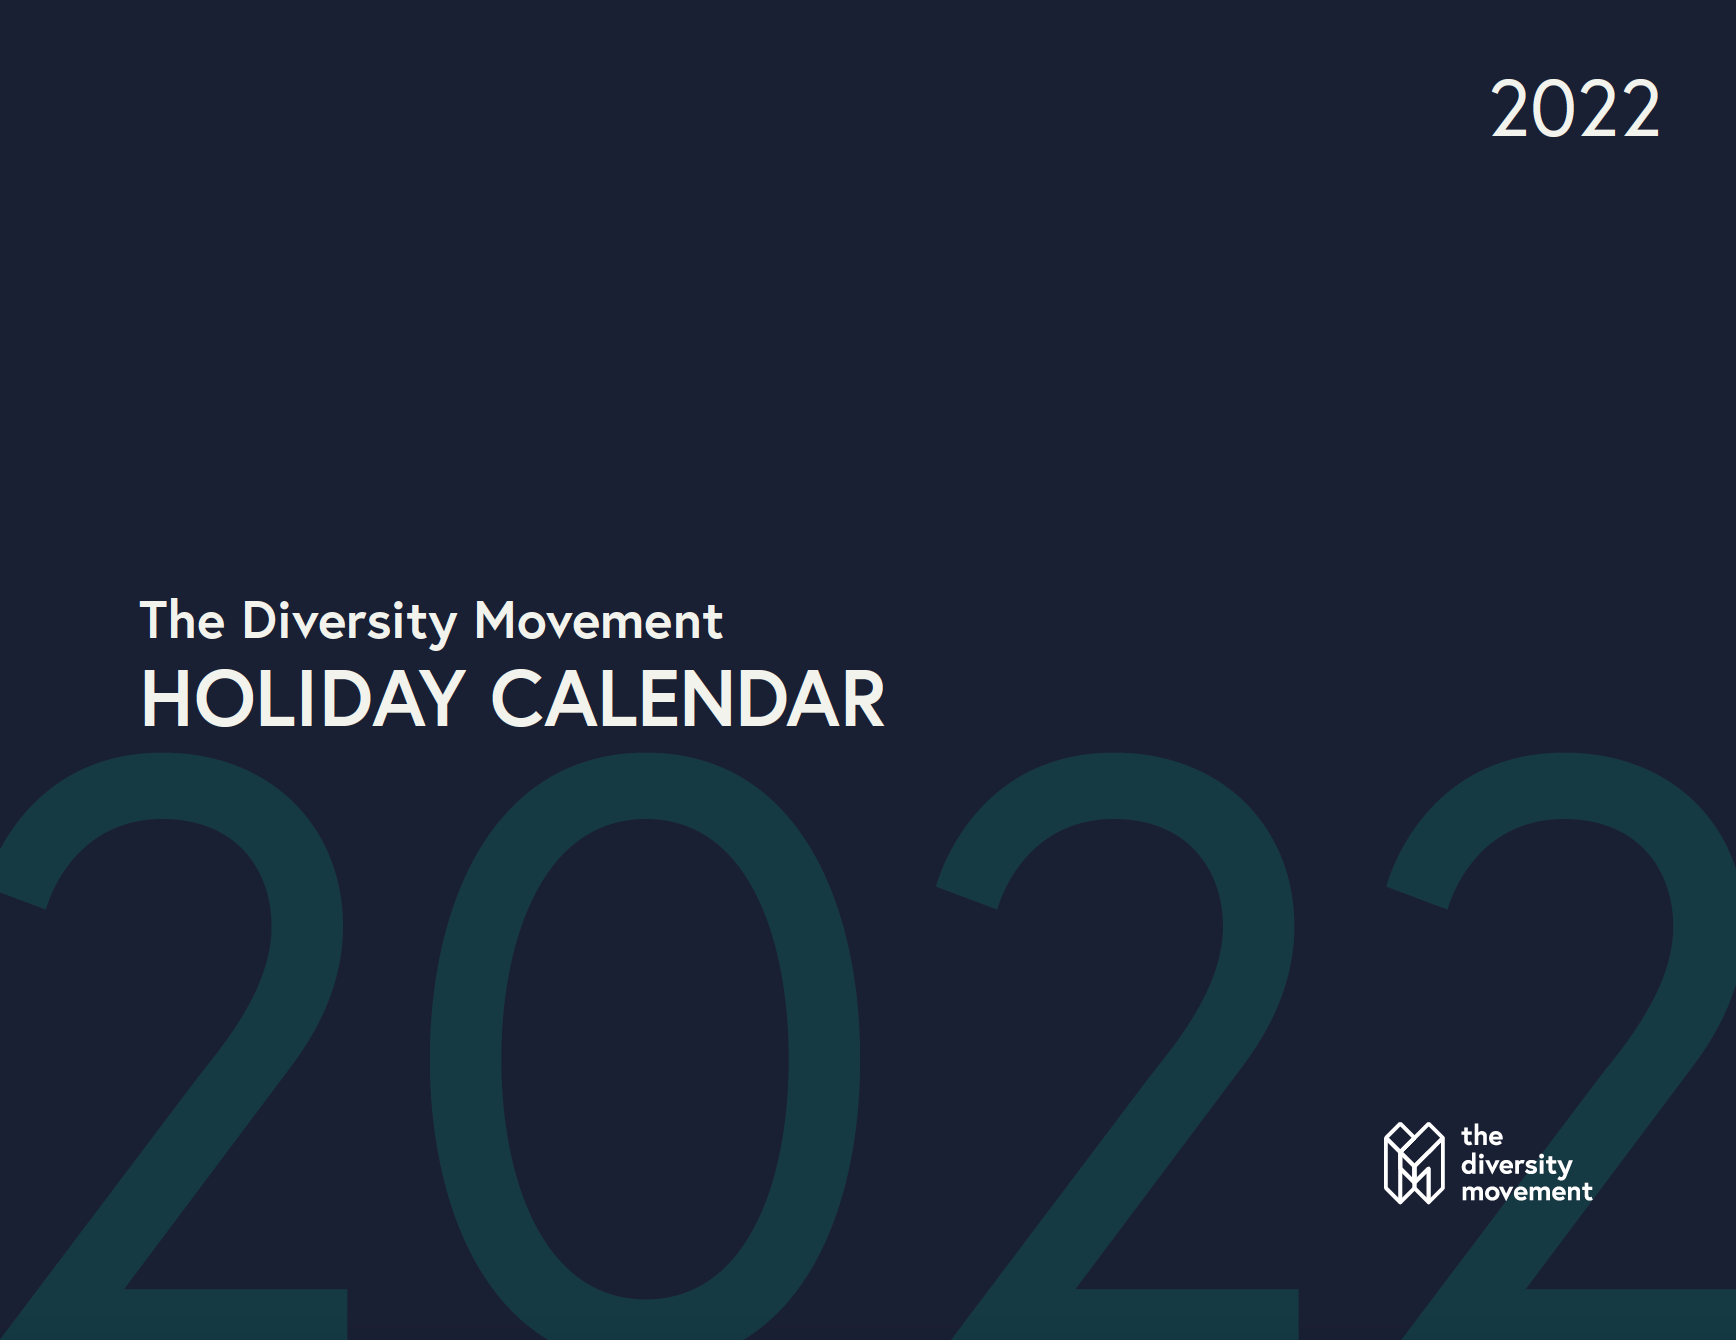 Multicultural Calendar 2022 2022 Diversity Holidays Calendar - The Diversity Movement